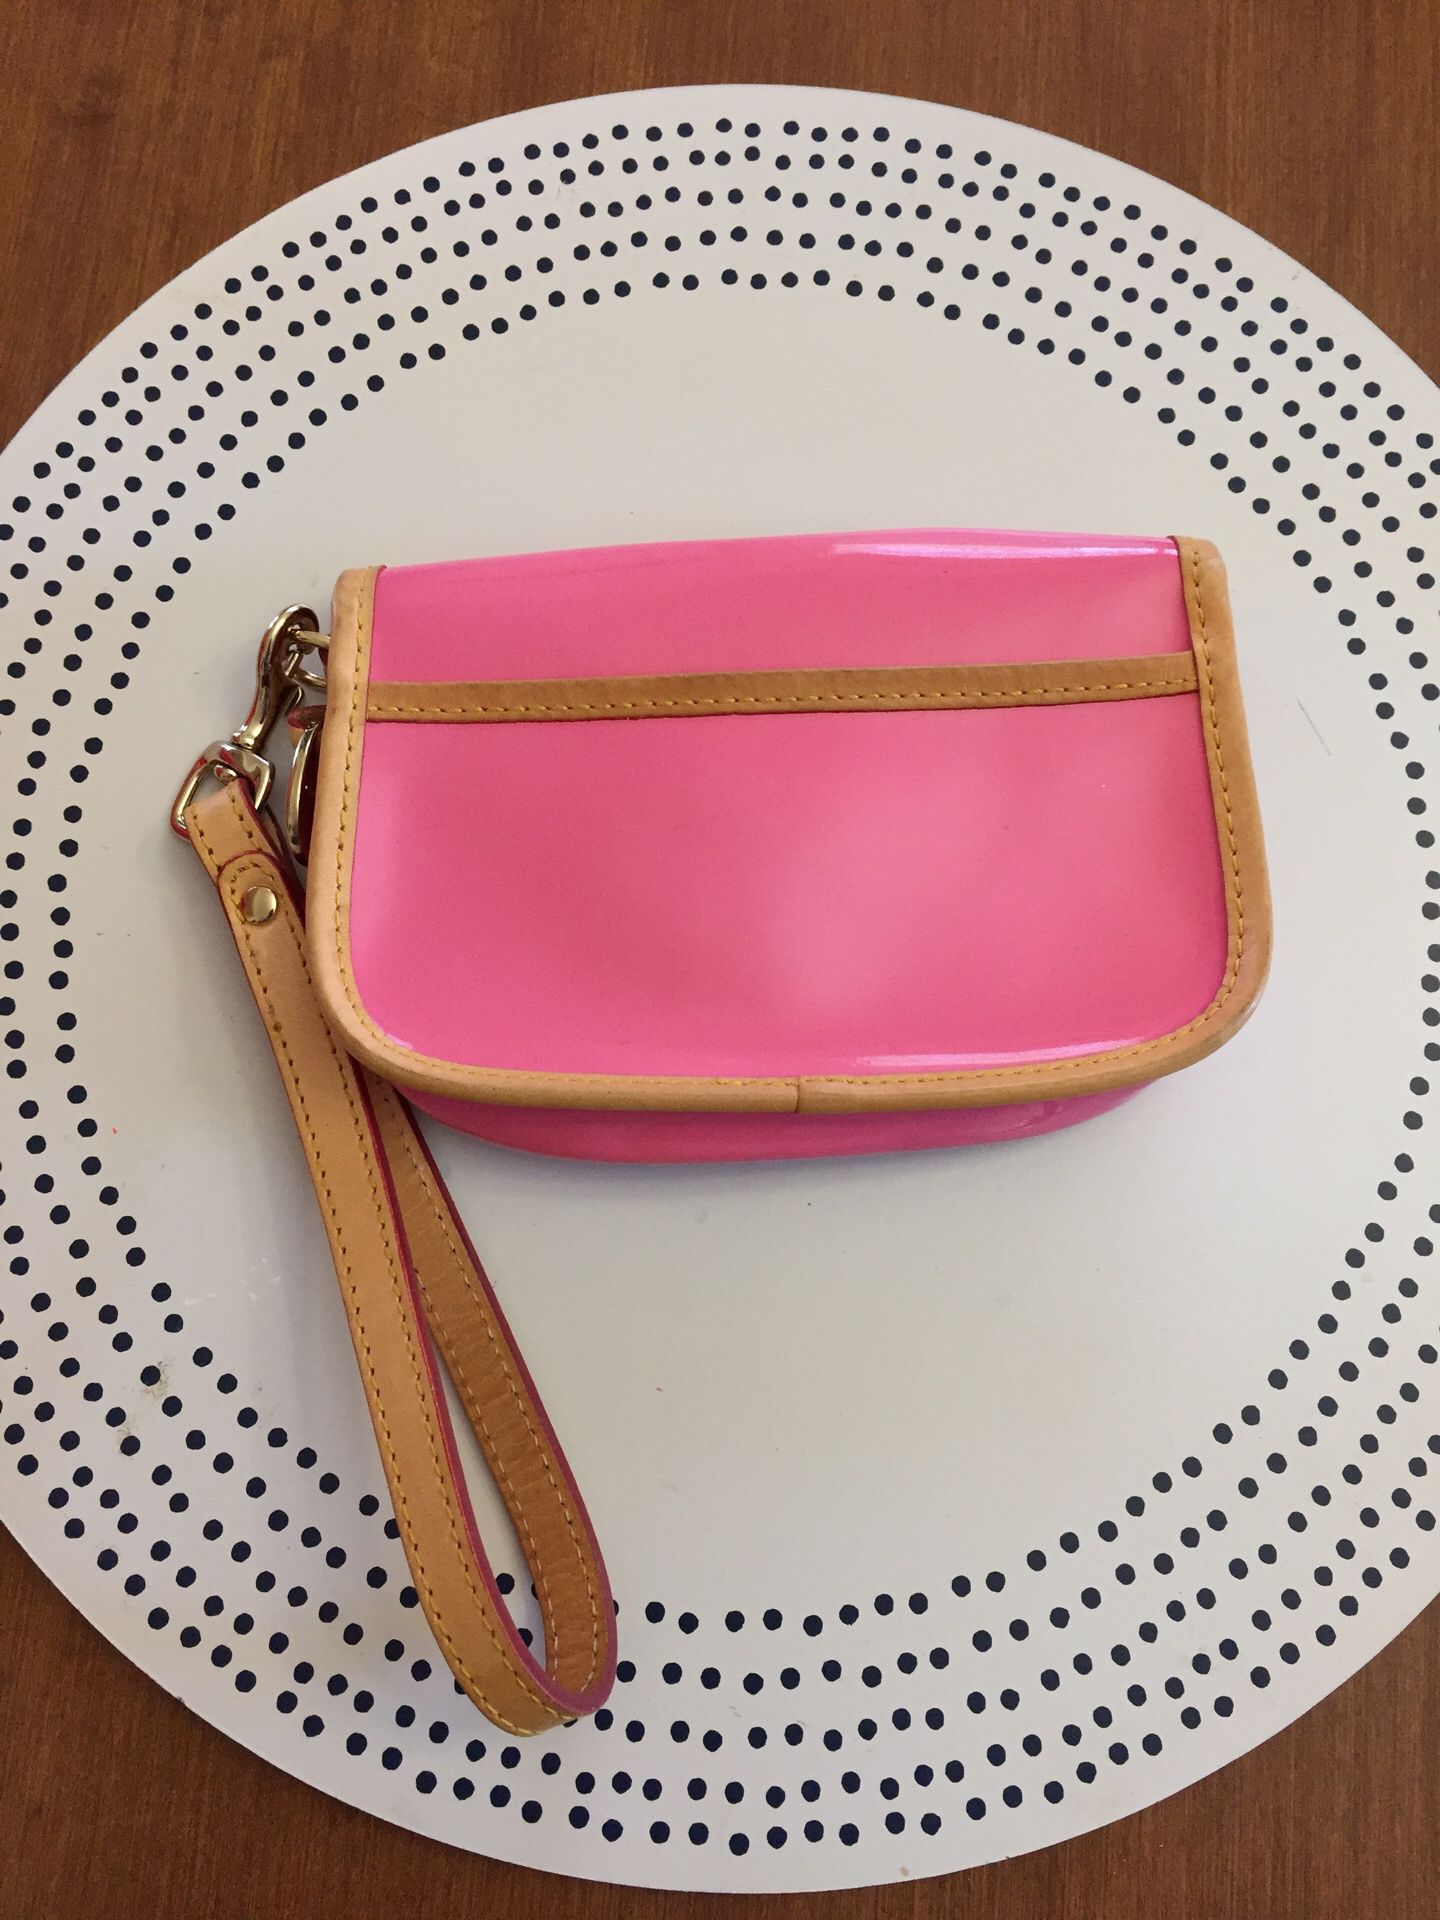 Dooney Bourke shinny pink wristlet envelop flap bag